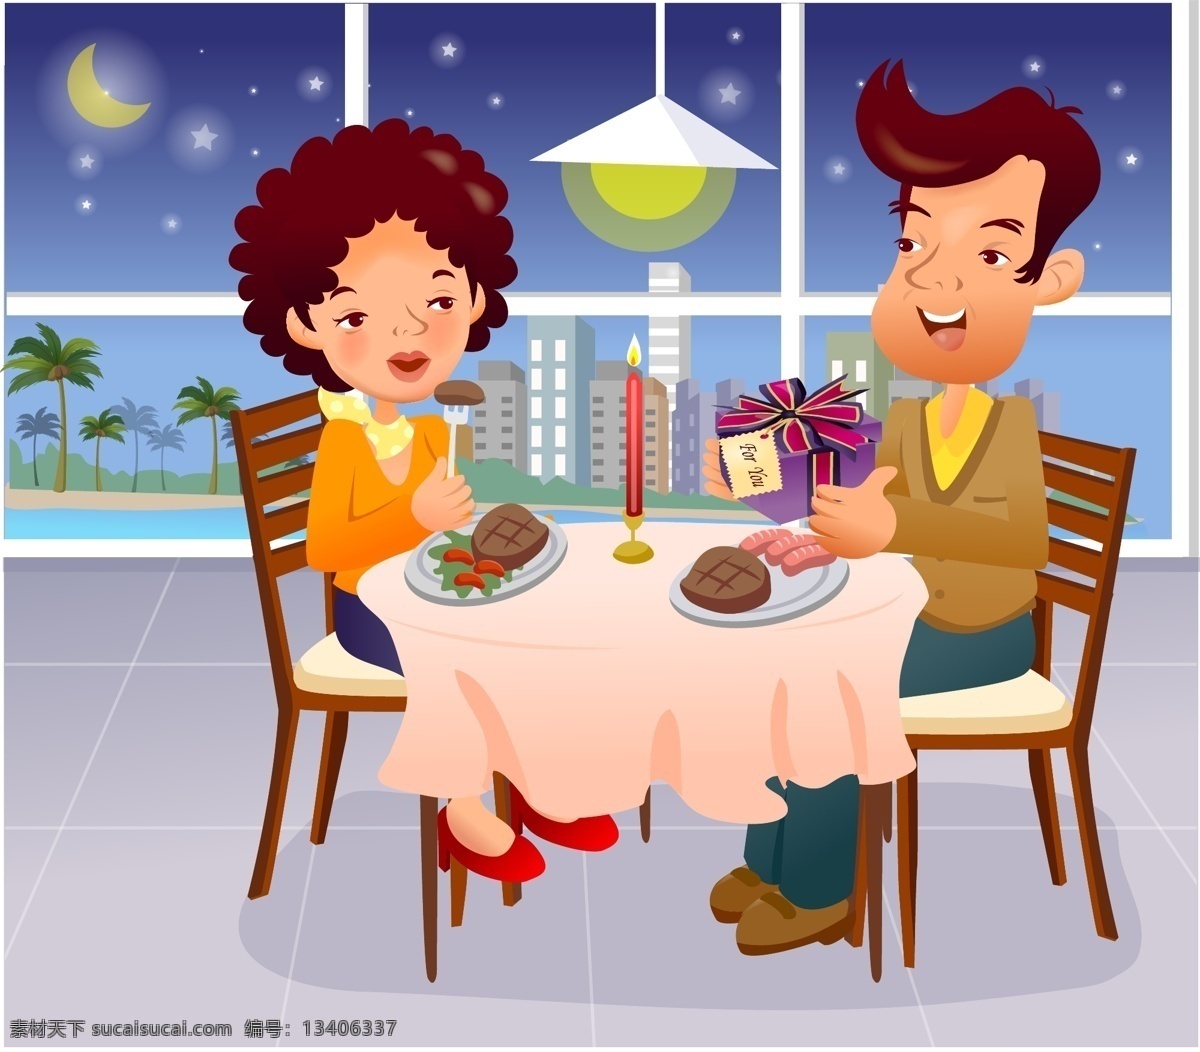 iclickart 卡通 家庭 插画 矢量 吃饭 可爱 人 西方 周年纪念 丈夫和妻子 矢量图 矢量人物